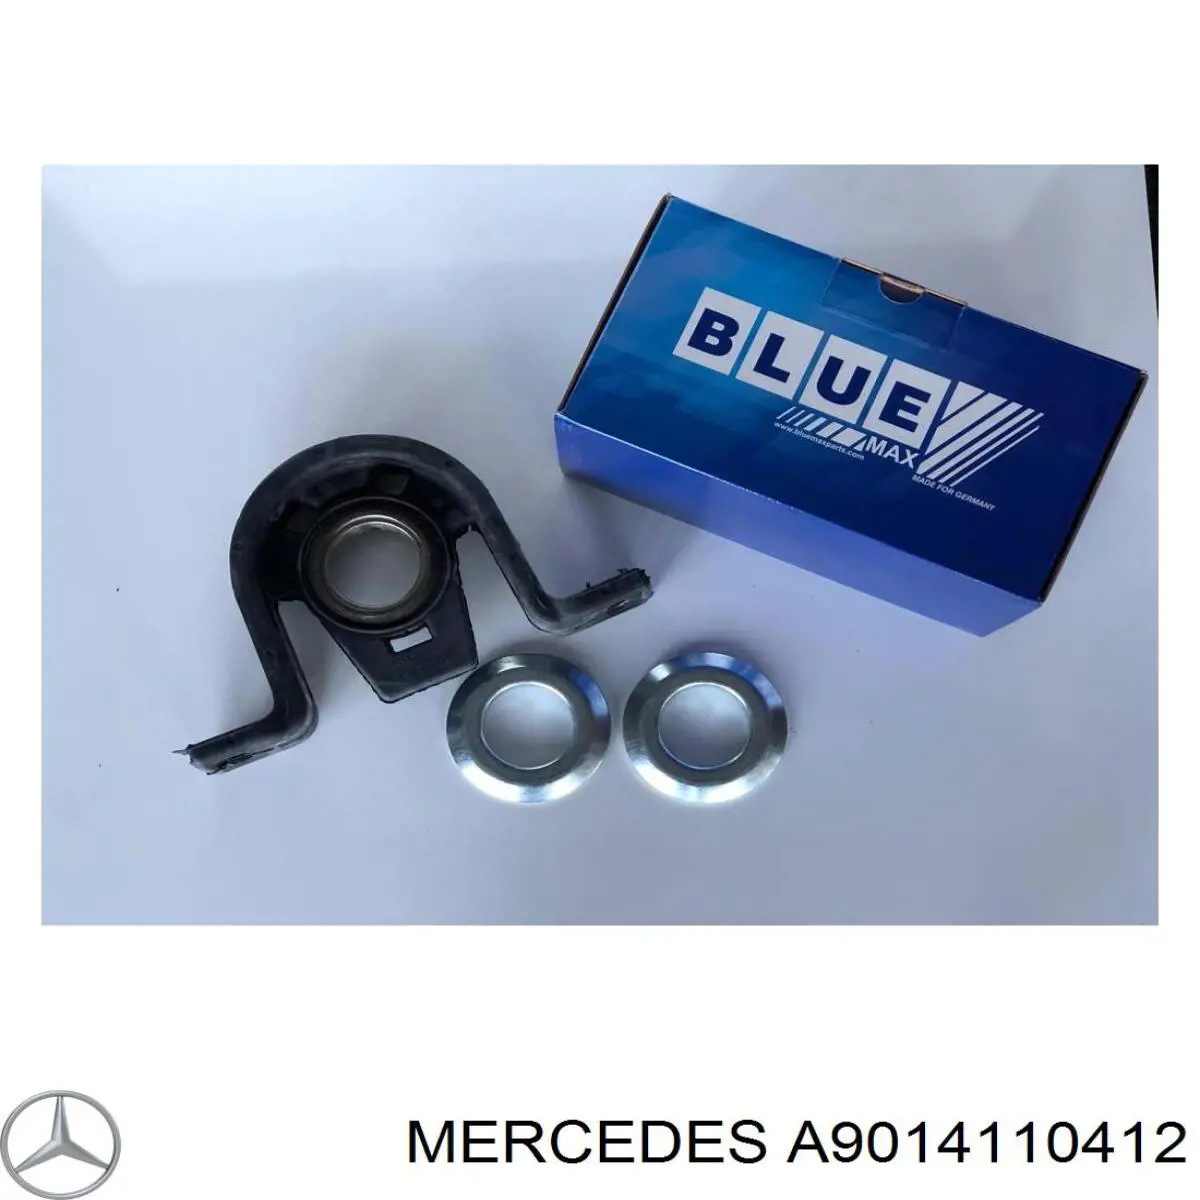 A9014110412 Mercedes подвесной подшипник карданного вала